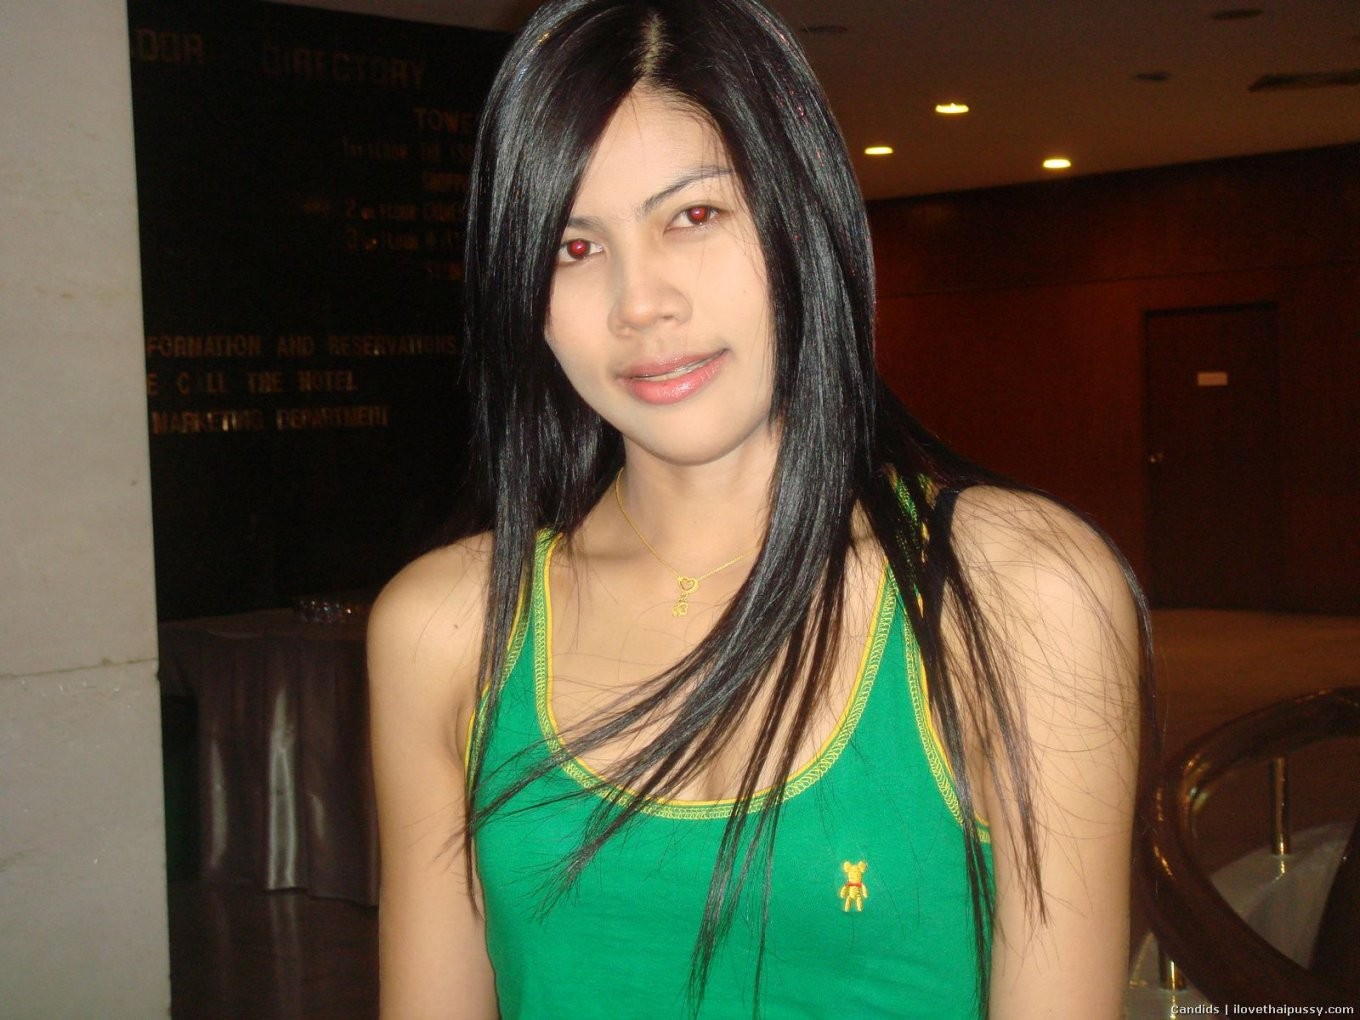 Putas tailandesas reales folladas a pelo por turistas locos sexo amateur prostitutas asiáticas
 #68153373